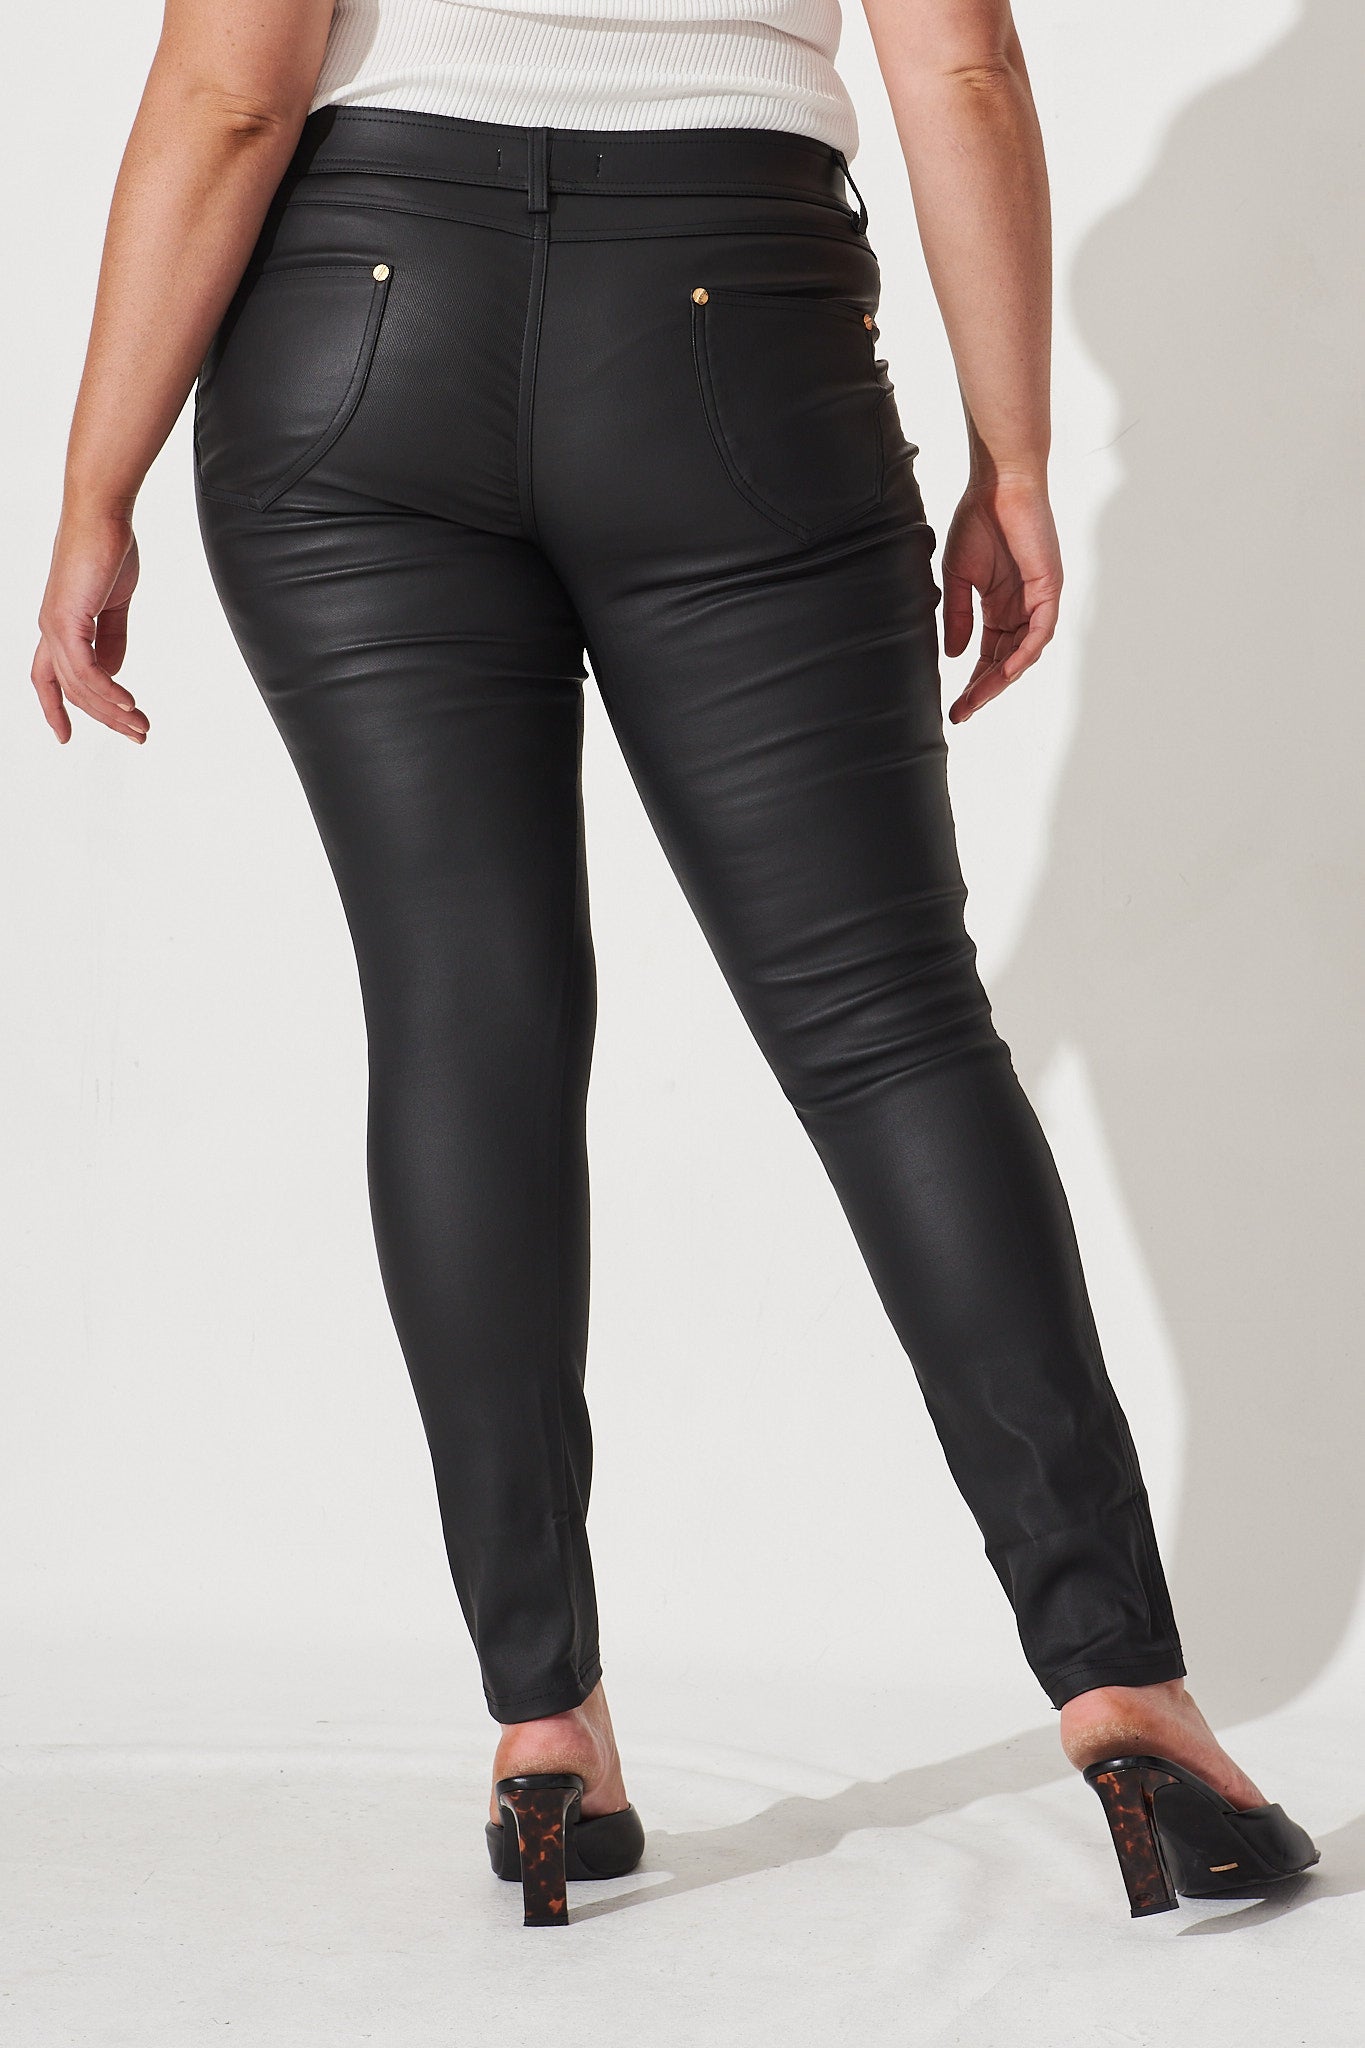 Sandy Pants in Black Leatherette – St Frock